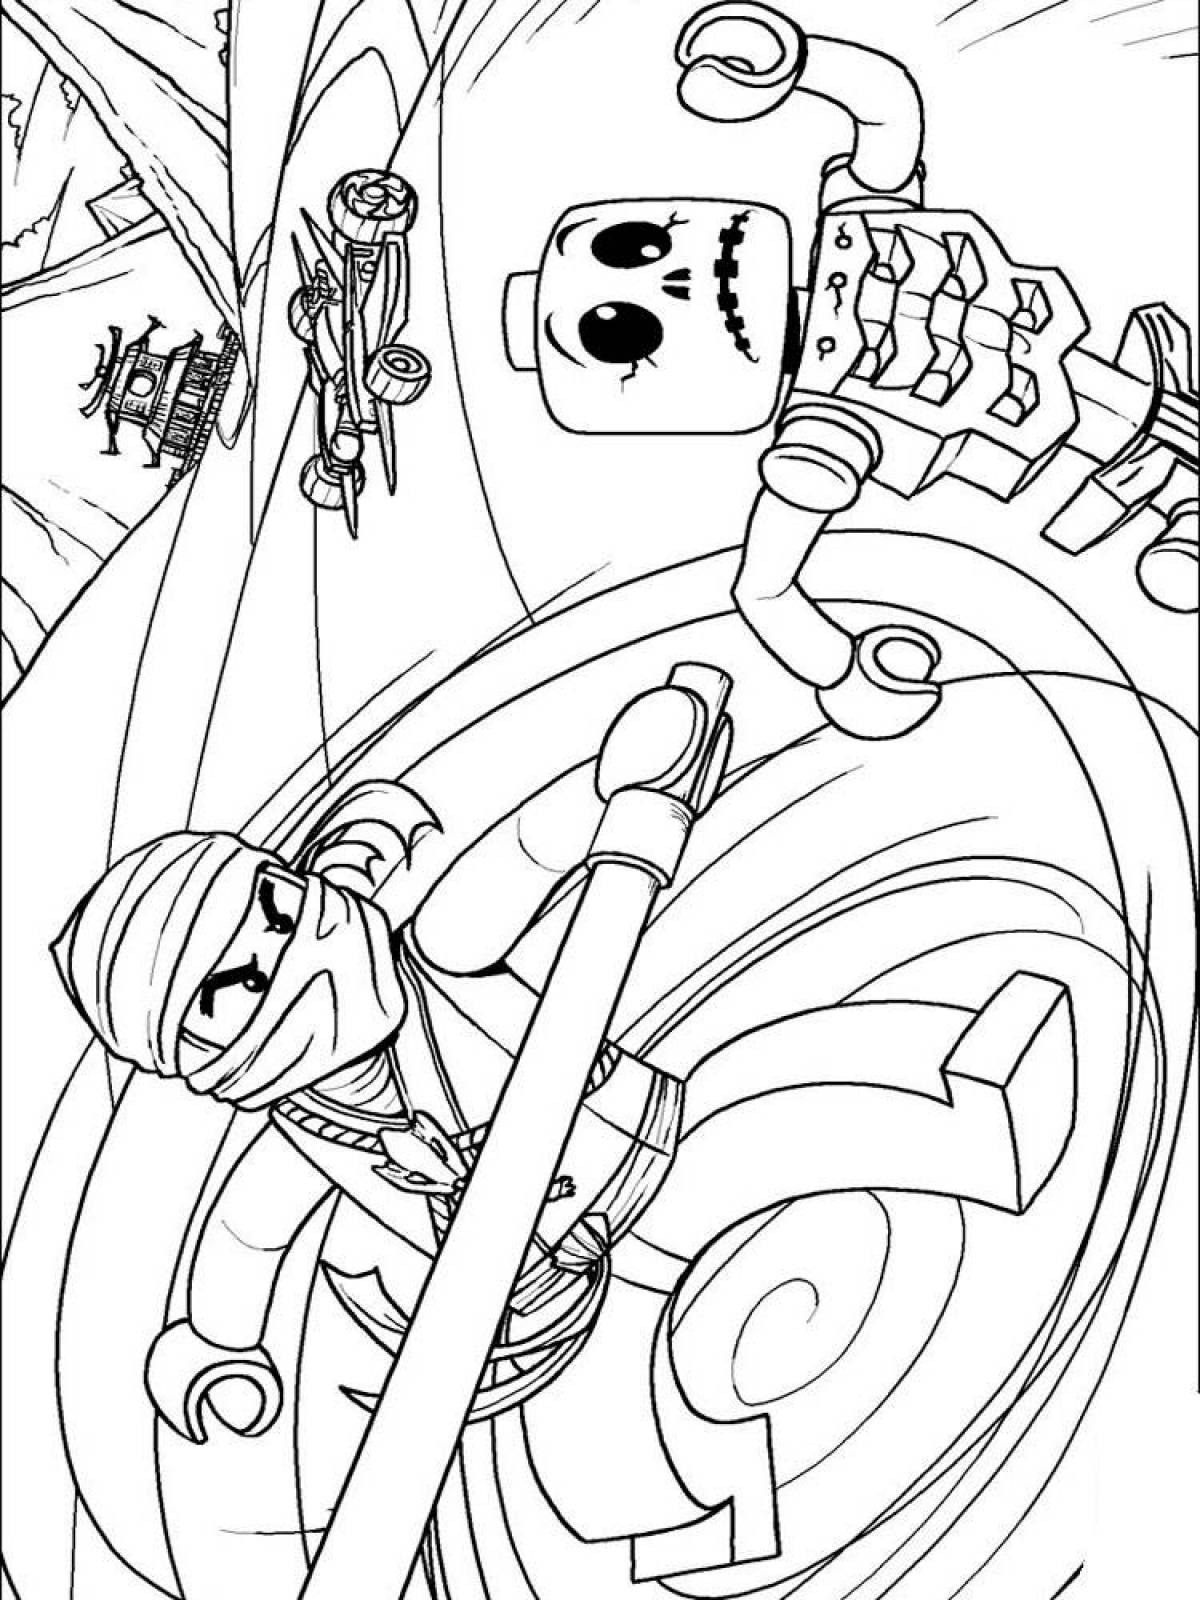 Amazing Gujitsu Heroes coloring page